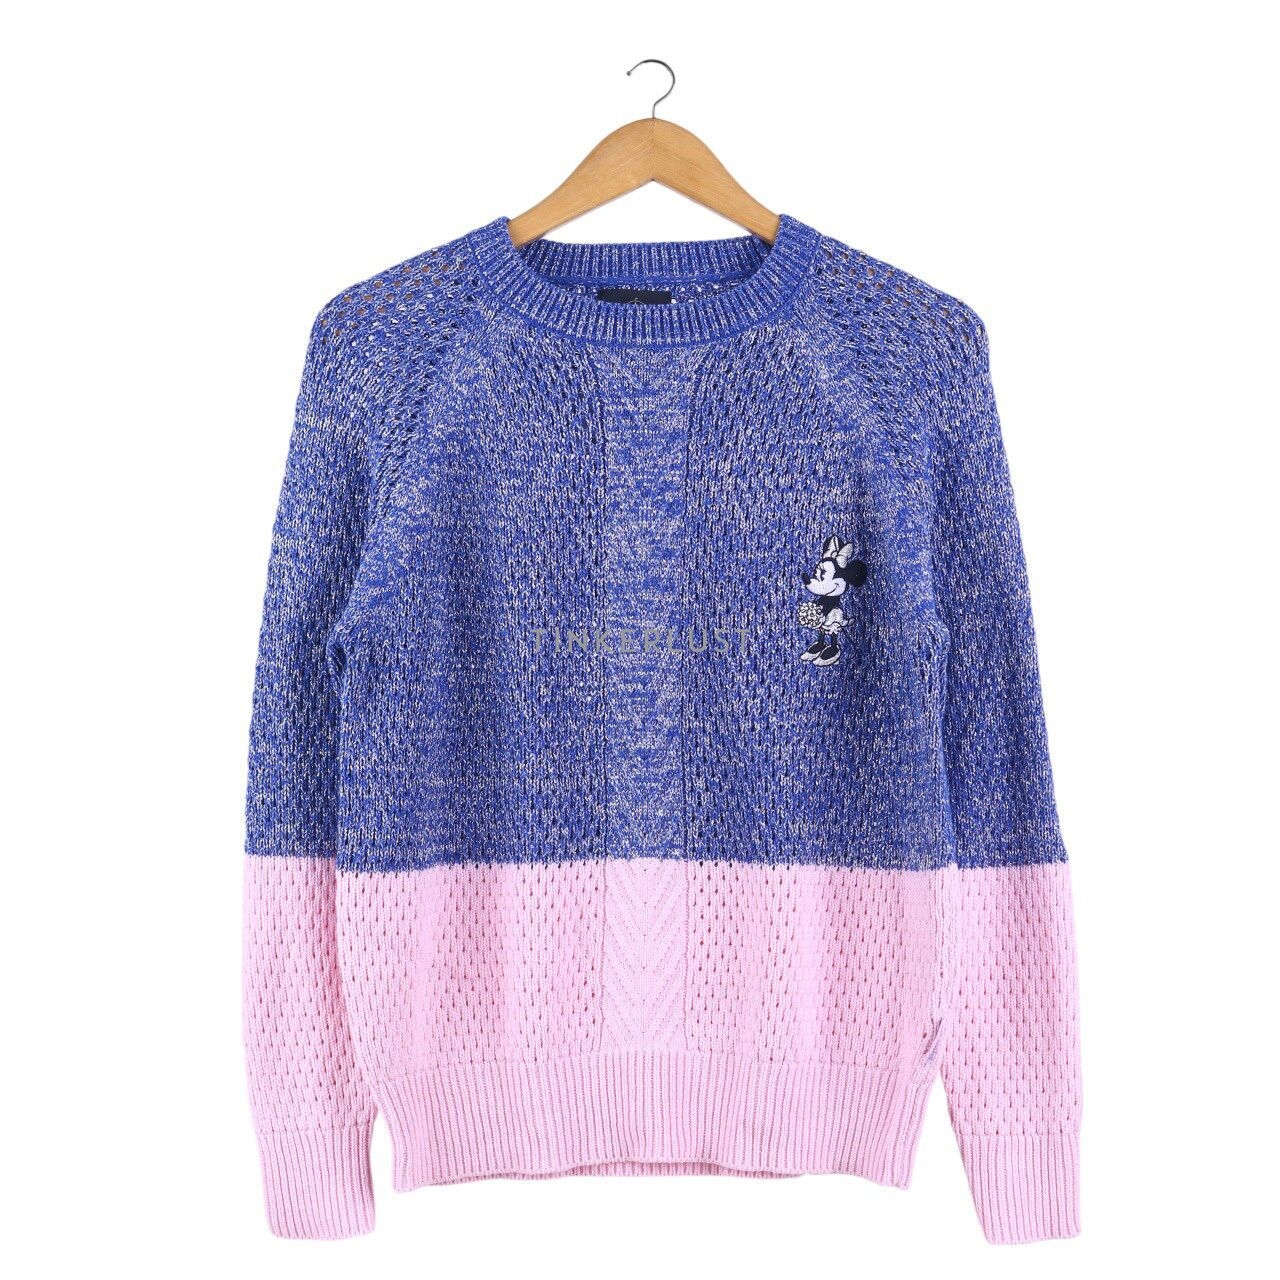 Disney Blue & Pink Knit Sweater